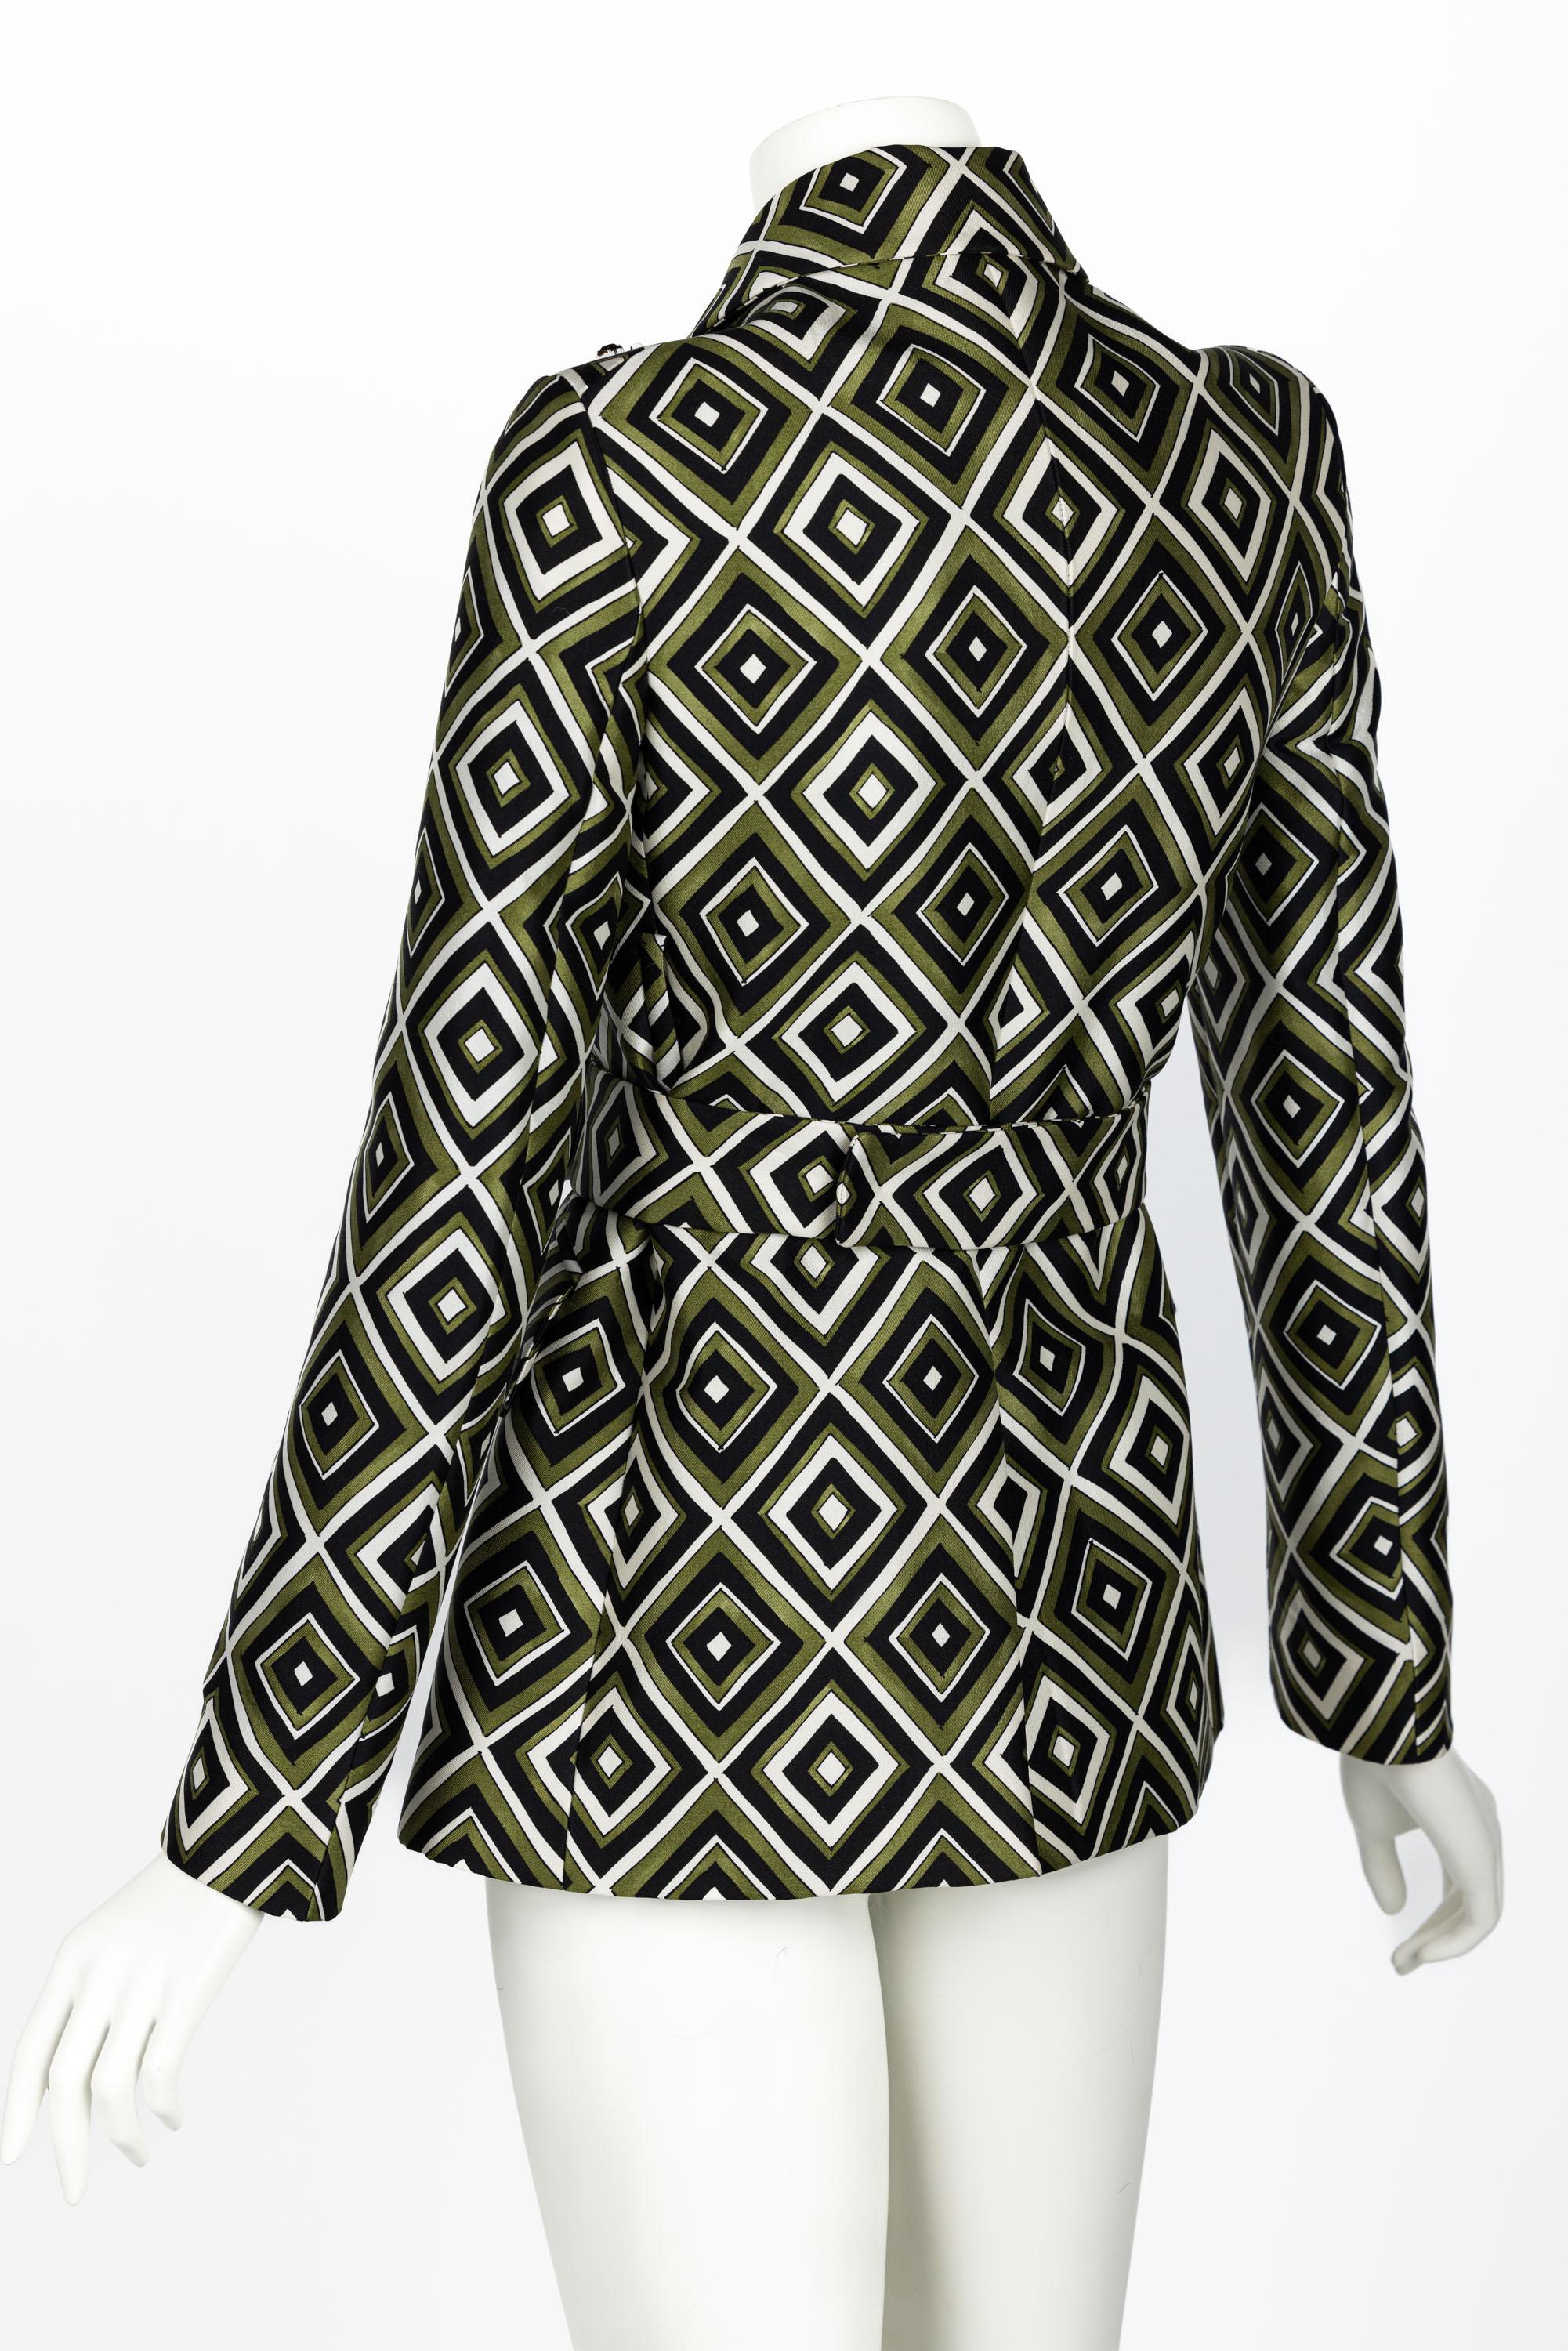 Prada F/W 2012 Geometric Print Crystal & Plexi Embellished Belted Jacket For Sale 1